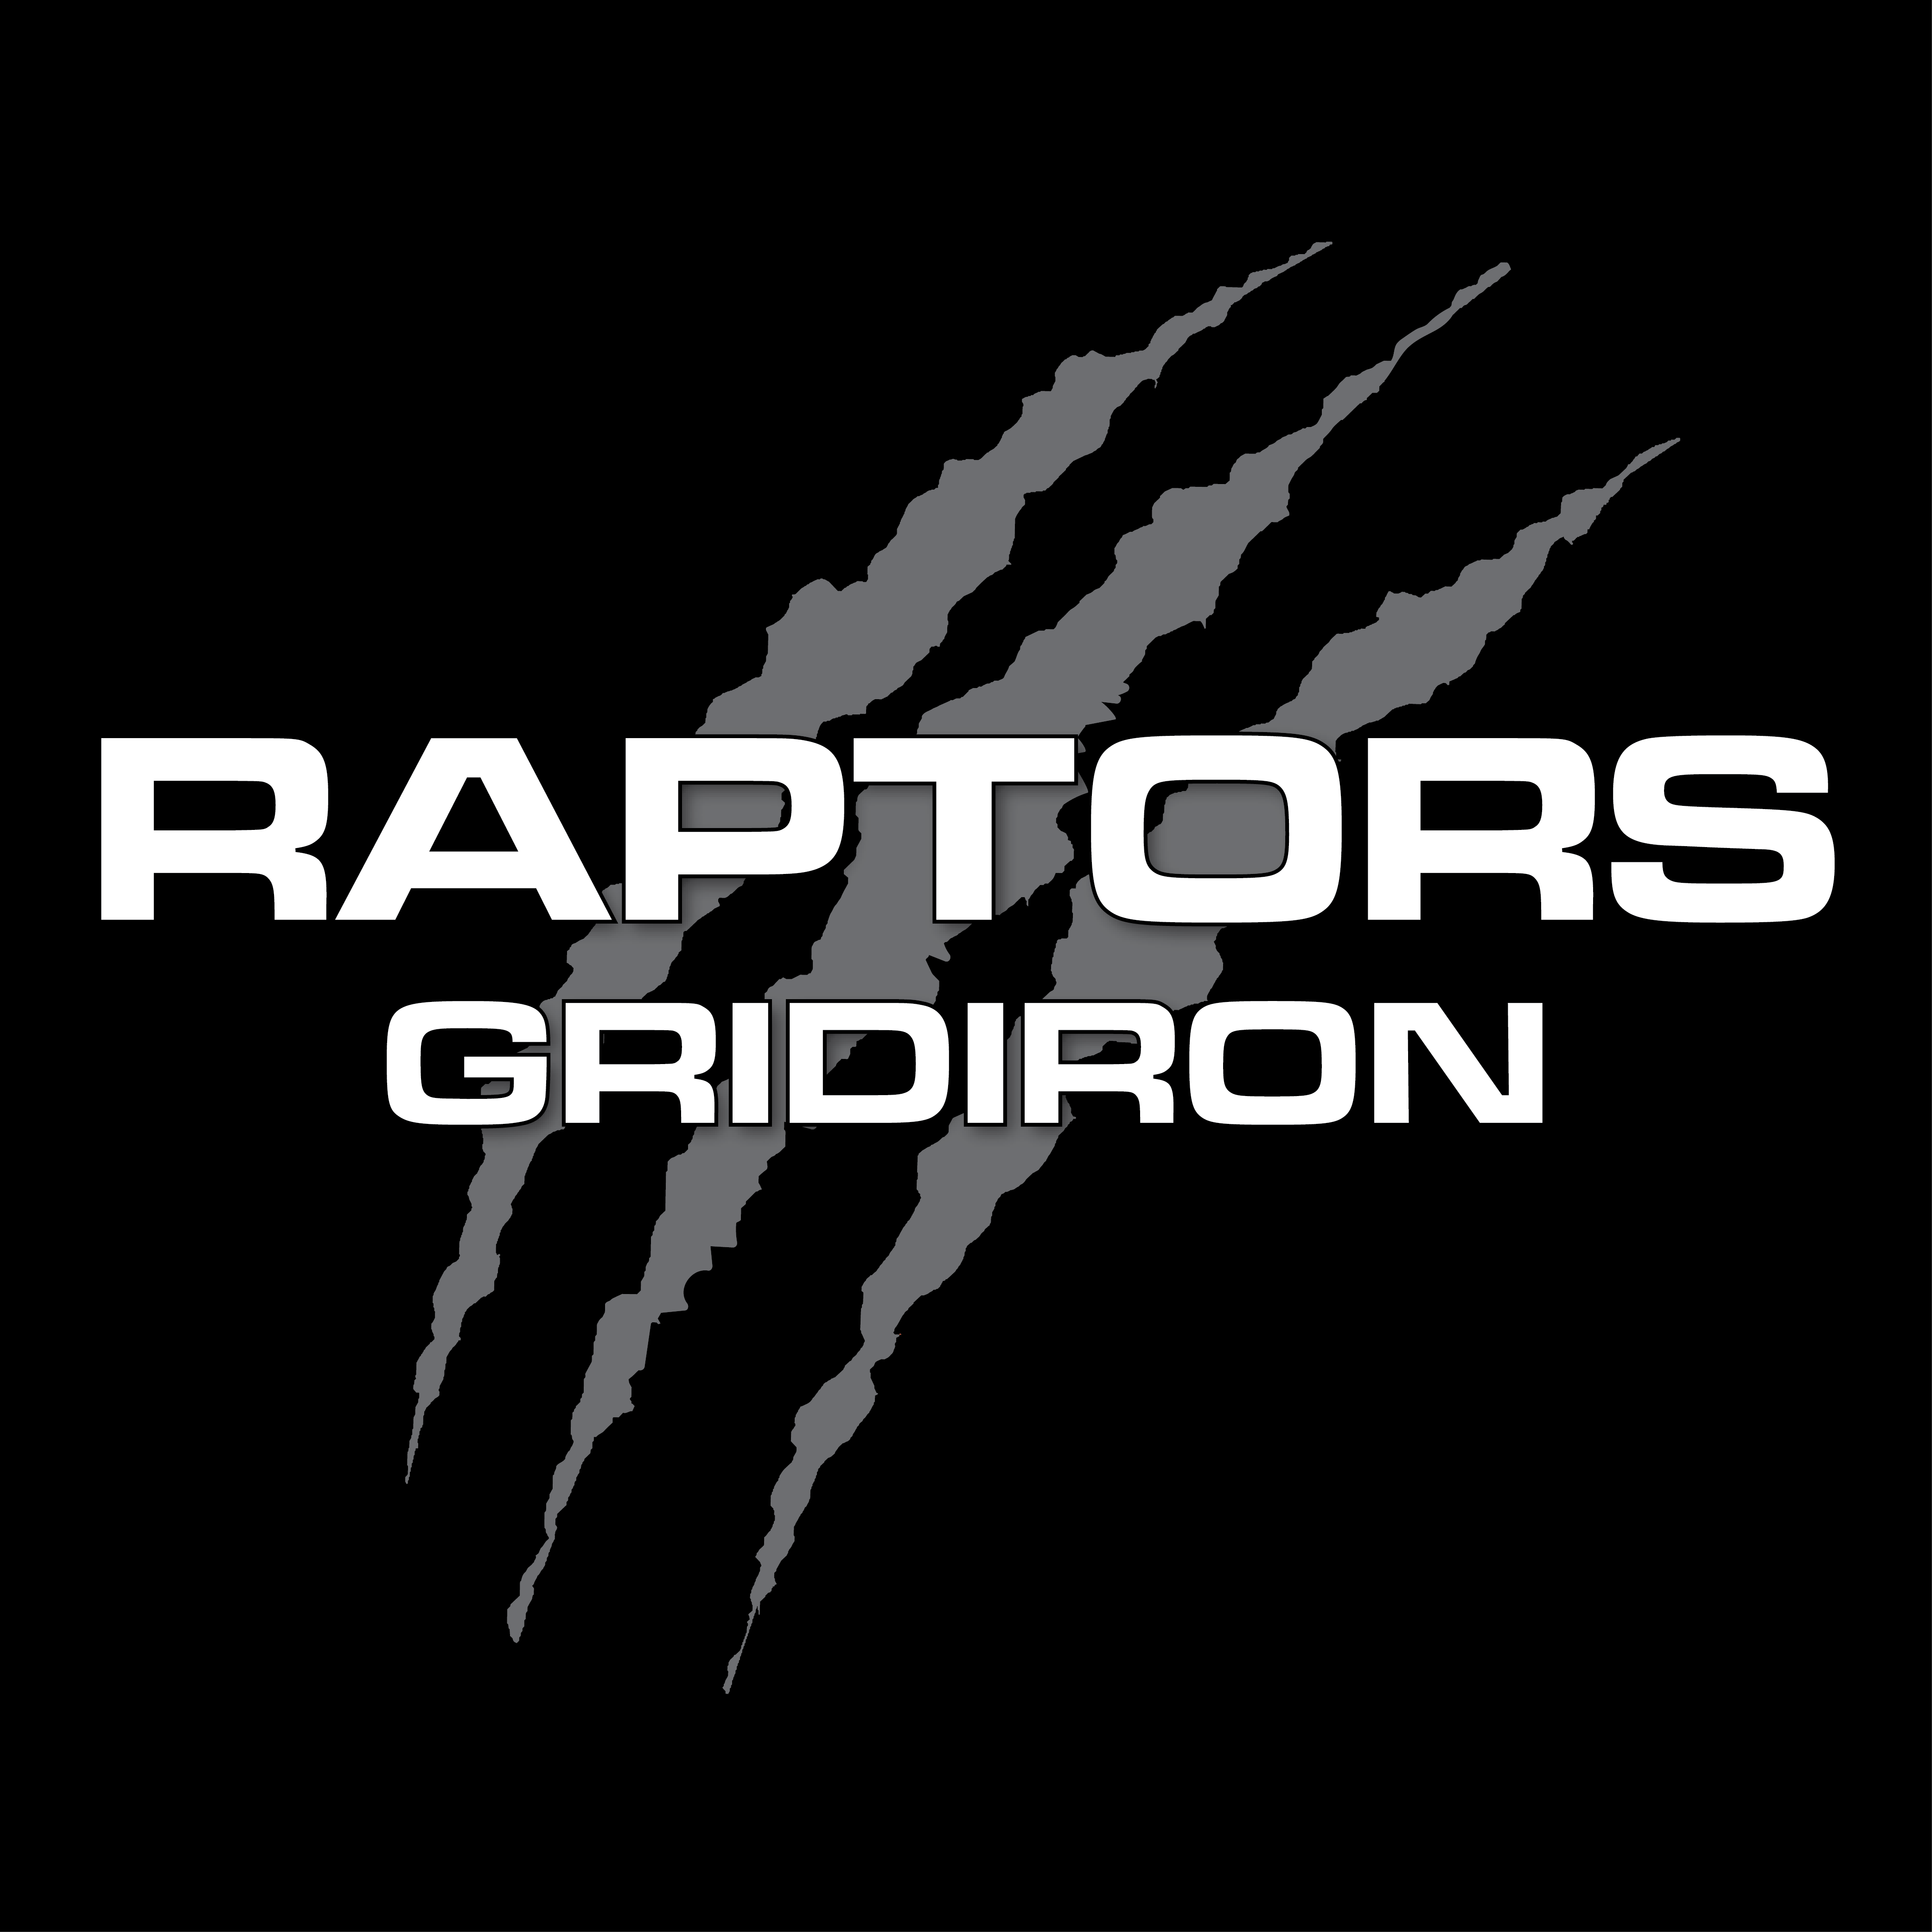 Raptors Logo - Main - BW (2)